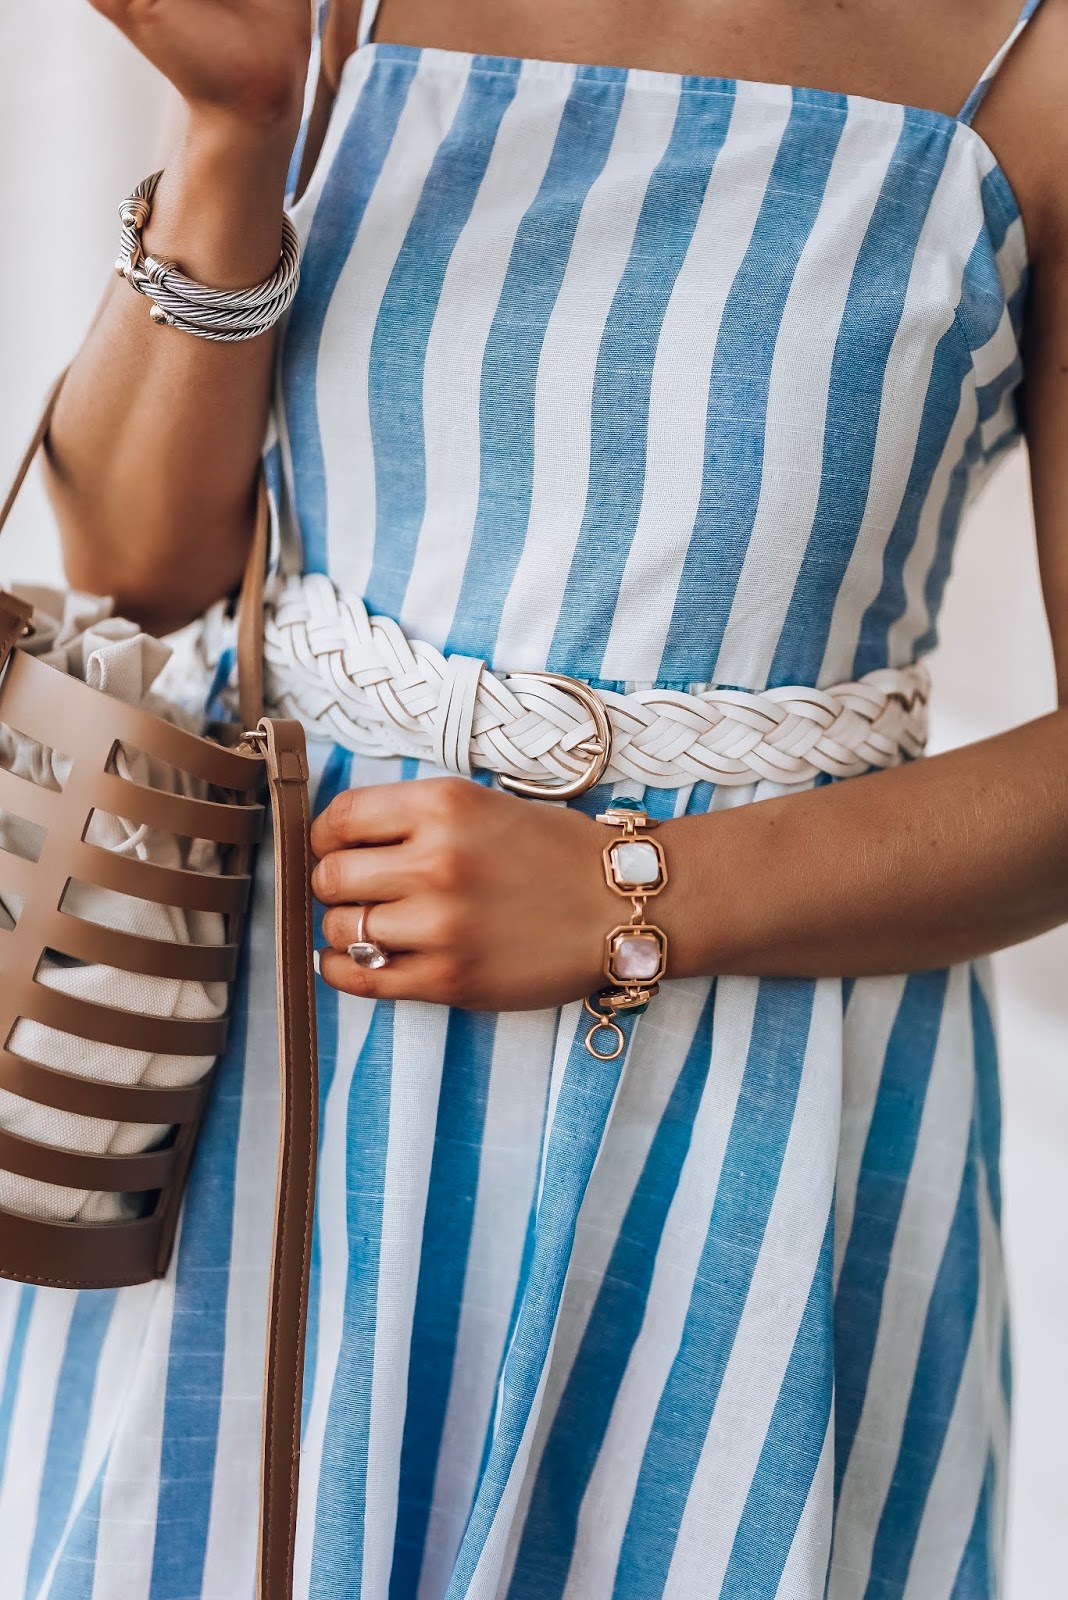 $17 Blue & white Stripe Dress + Recent Amazon Finds - Something Delightful Blog #springstyle #summerstyle #amazon #amazonfashion #amazonfashionfinds #blueandwhite